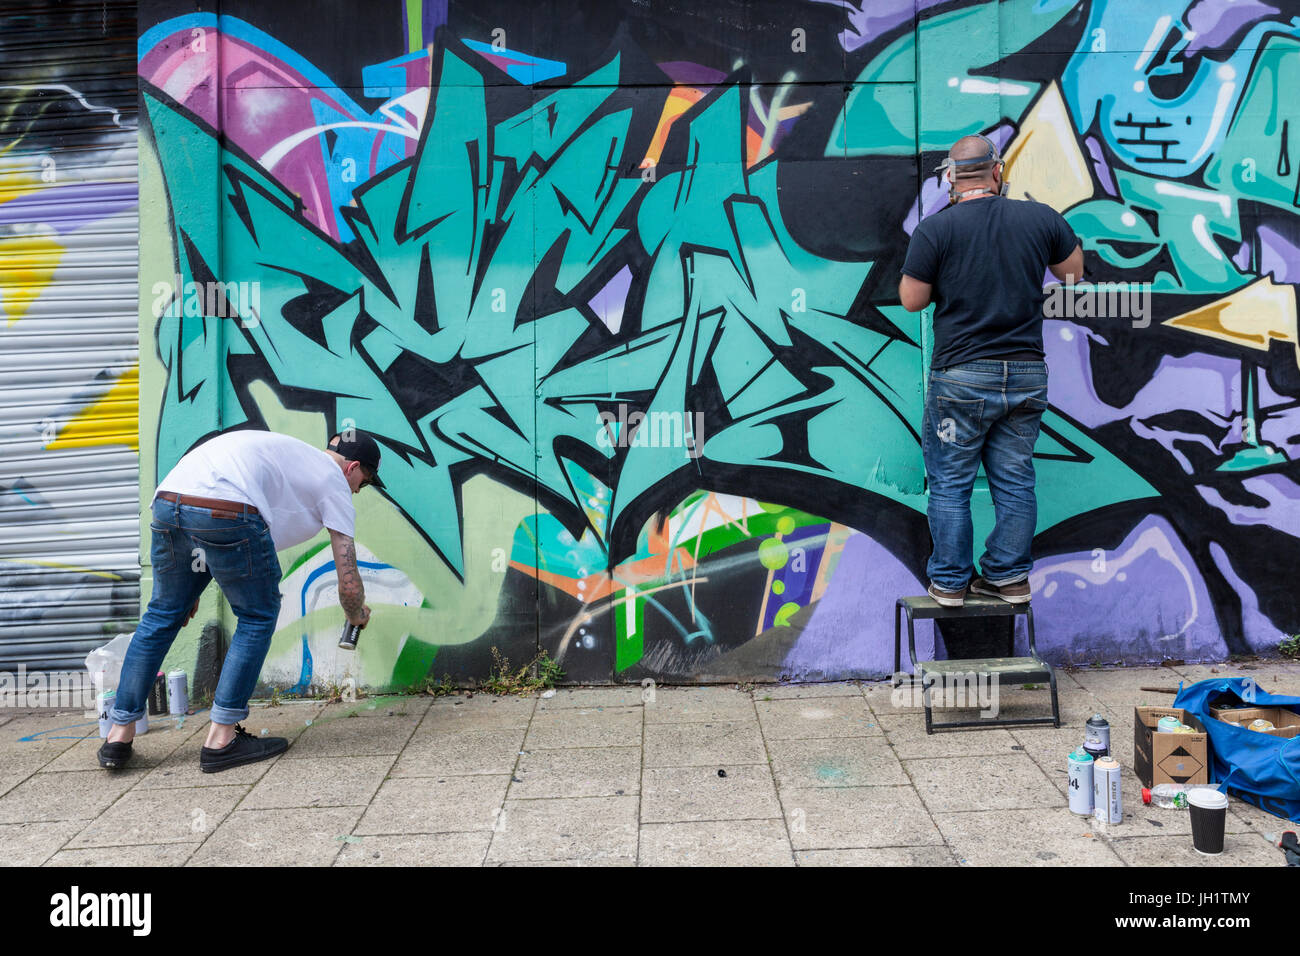 Los artistas del graffiti pintar una pared, Nottingham, Inglaterra, Reino Unido. Foto de stock